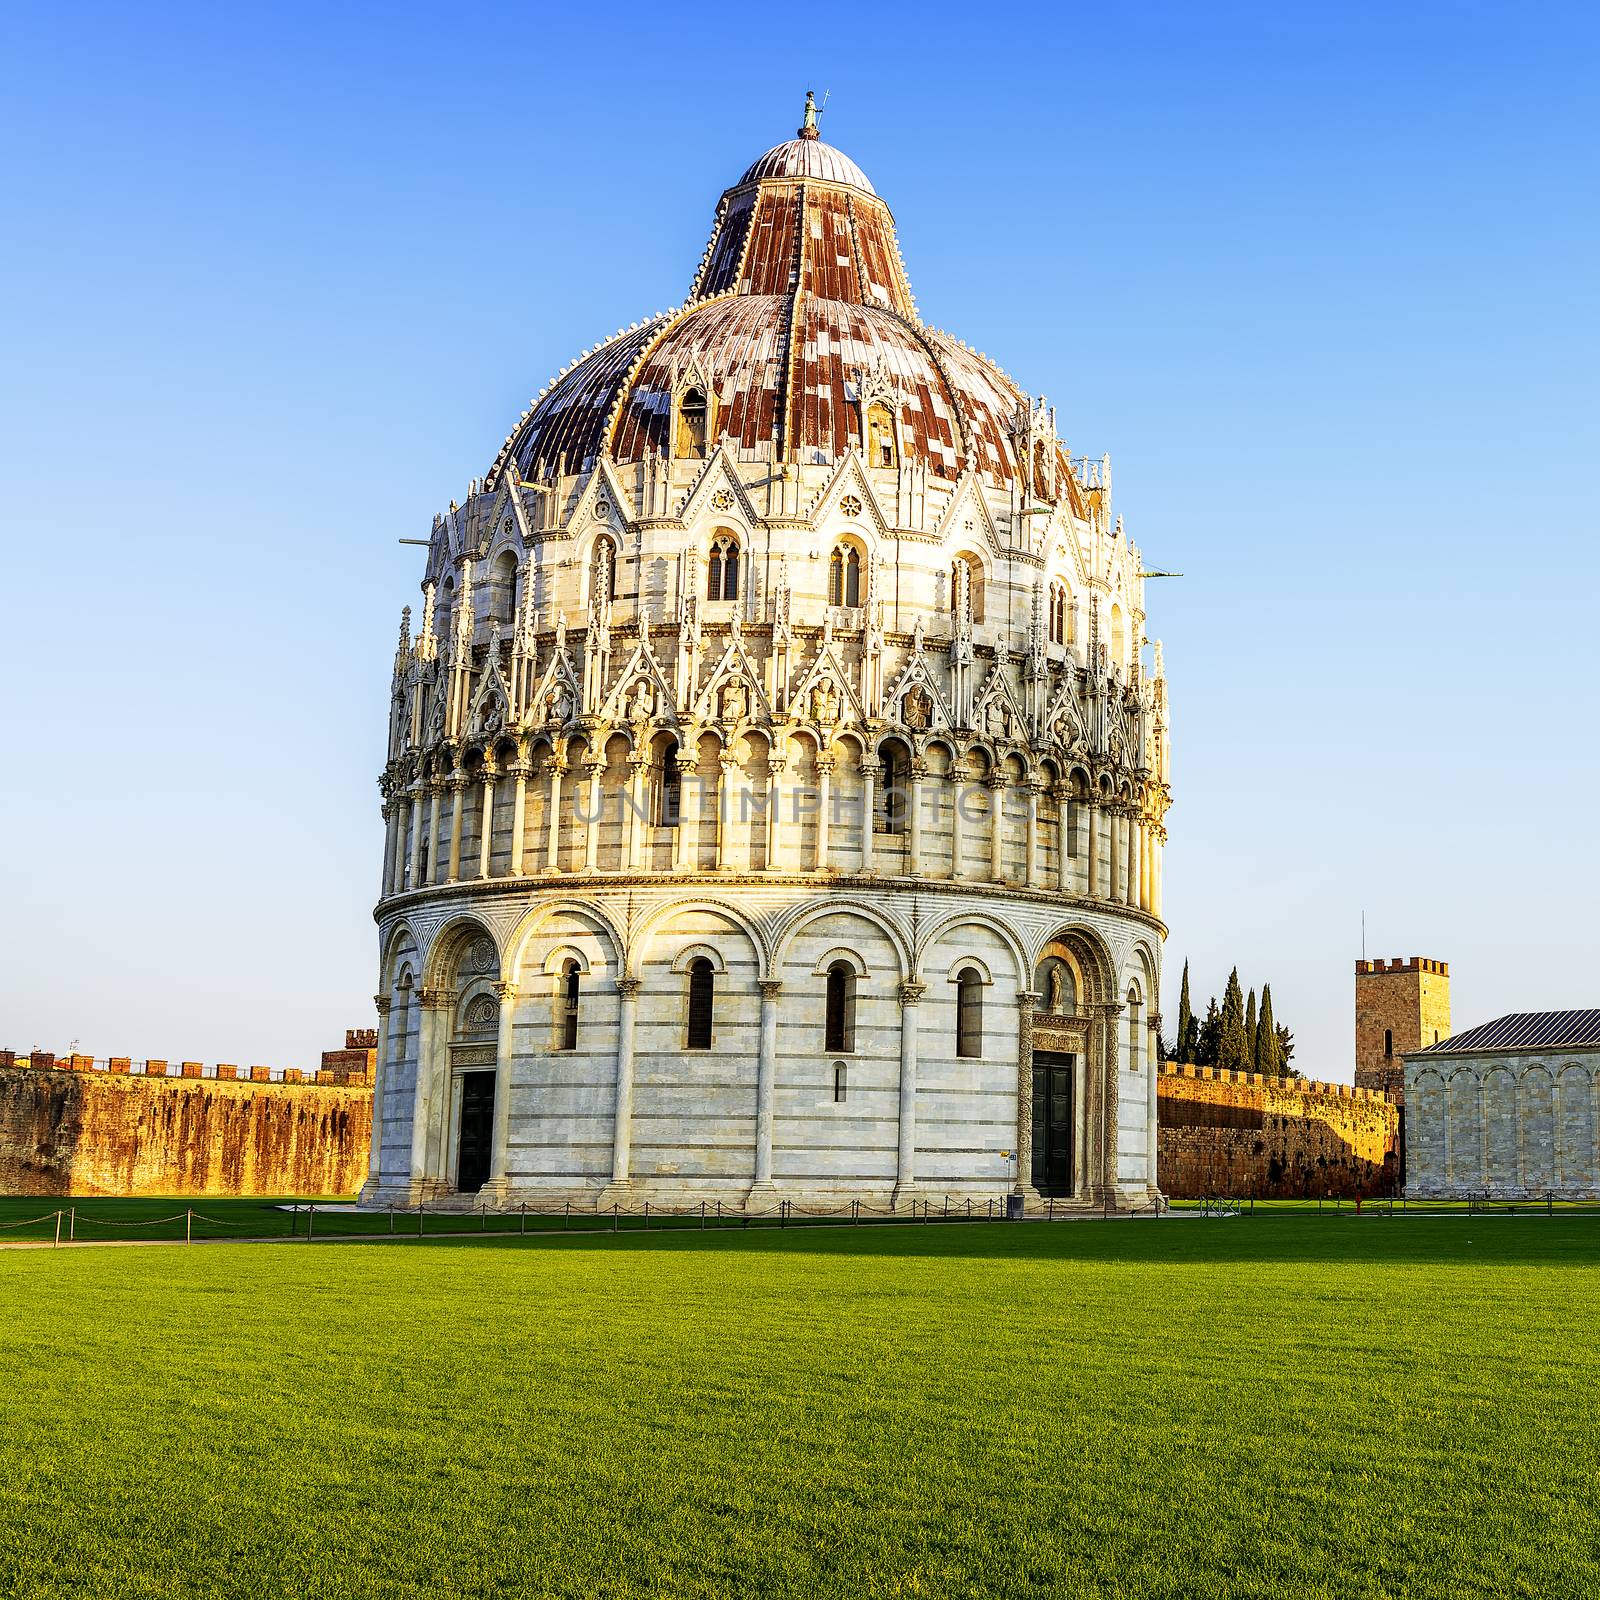 baptistry of Pisa, Italy by ventdusud